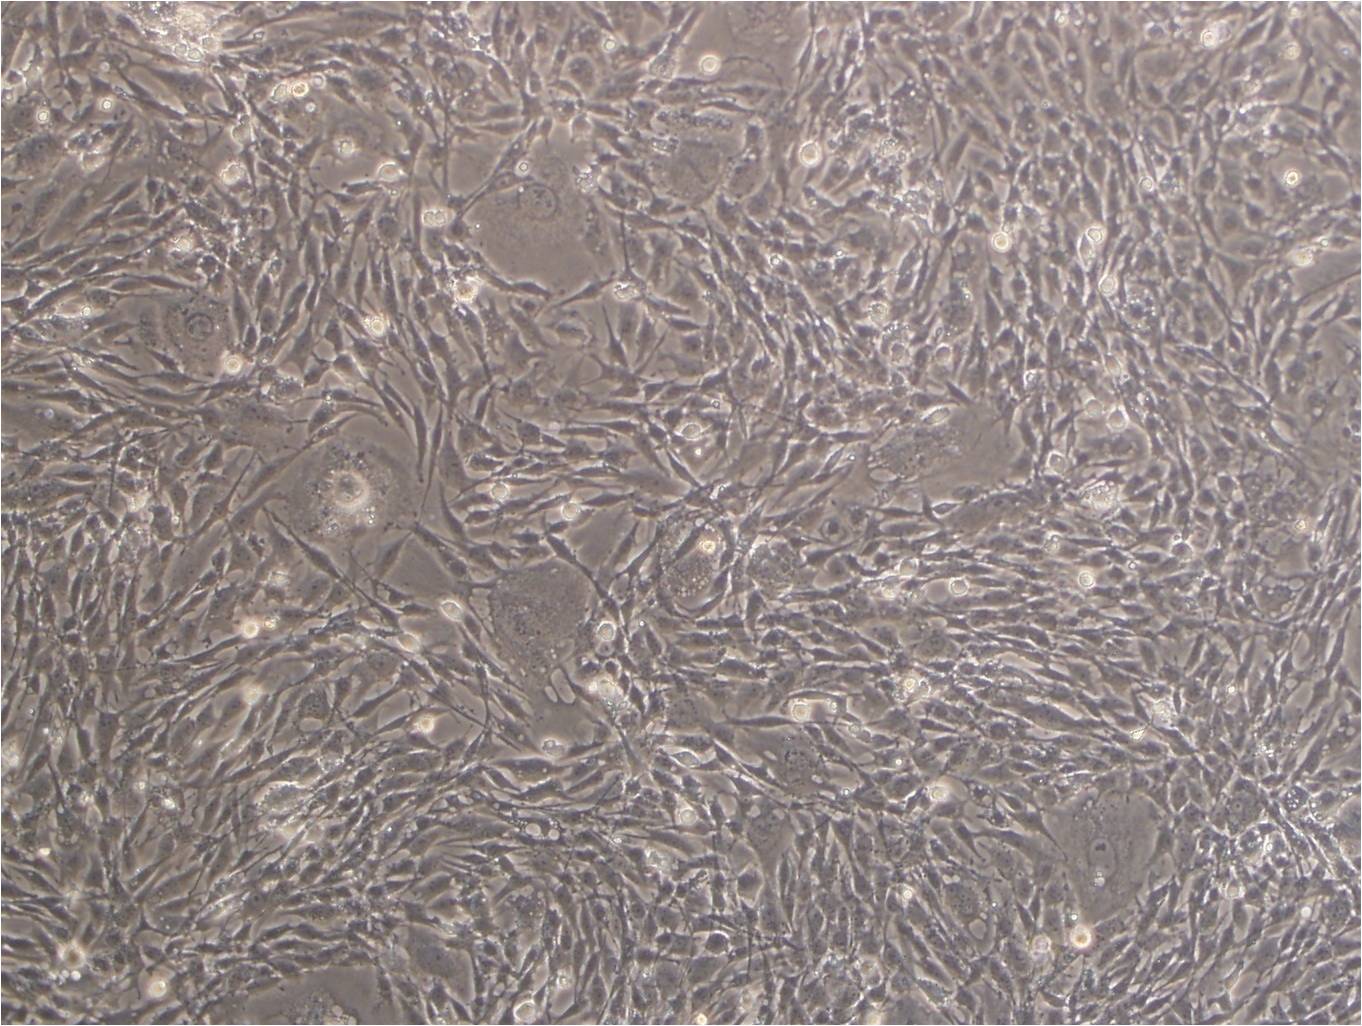 NCI-H508 epithelioid cells人结肠直肠腺癌细胞系,NCI-H508 epithelioid cells